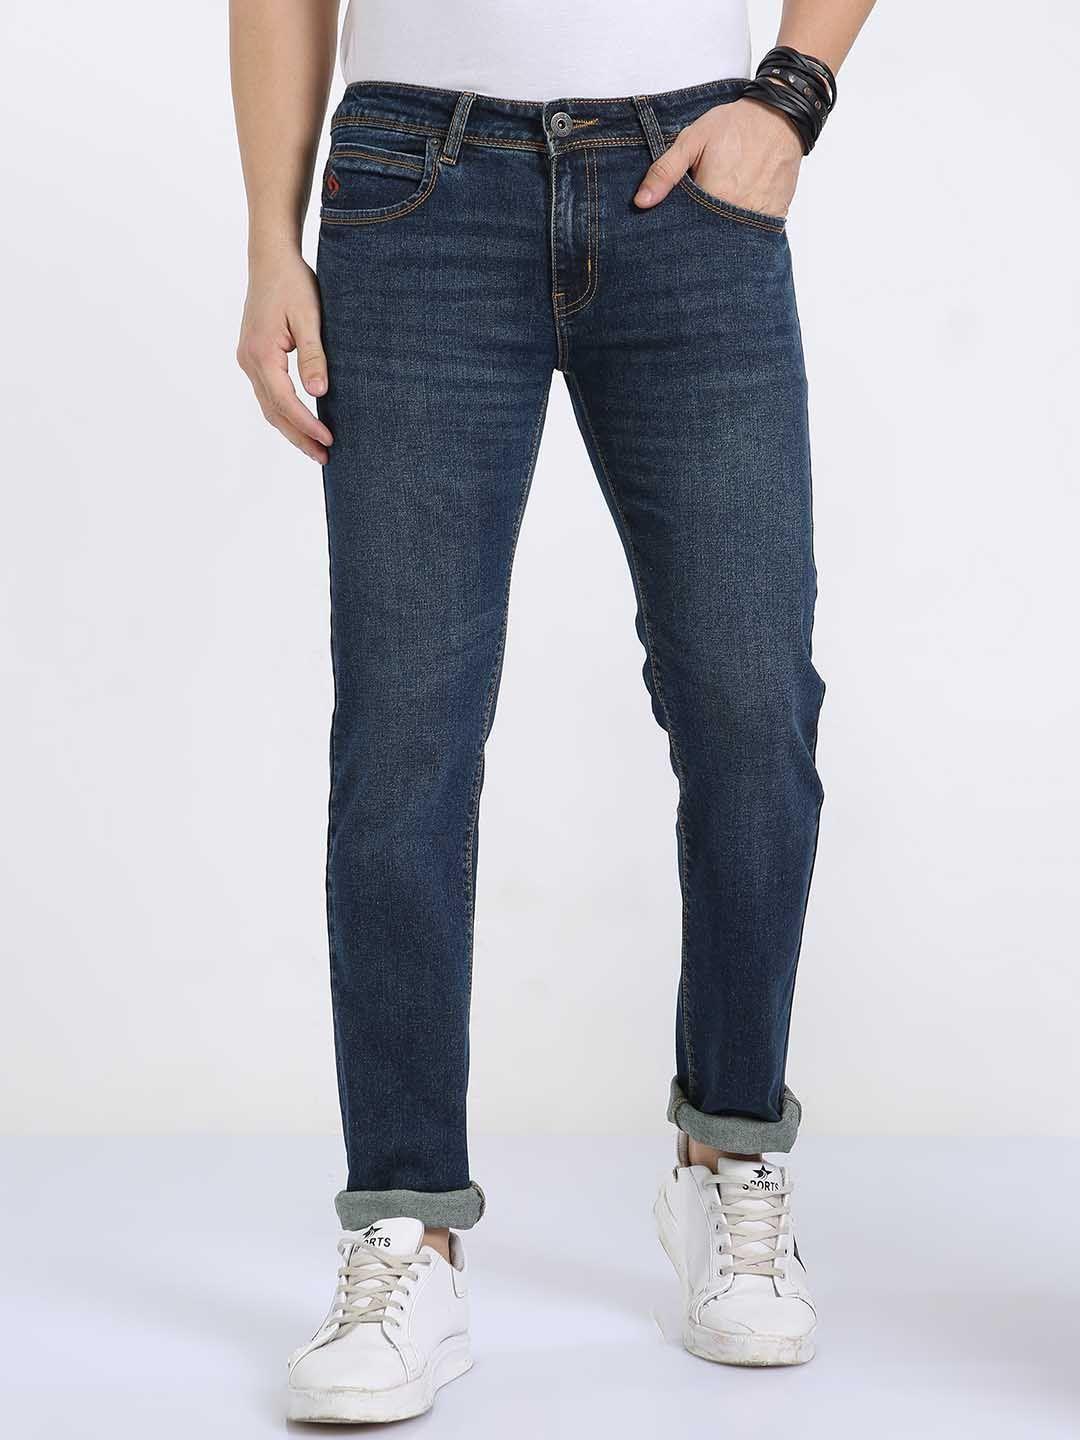 classic-polo-men-jean-slim-fit-light-fade-jeans